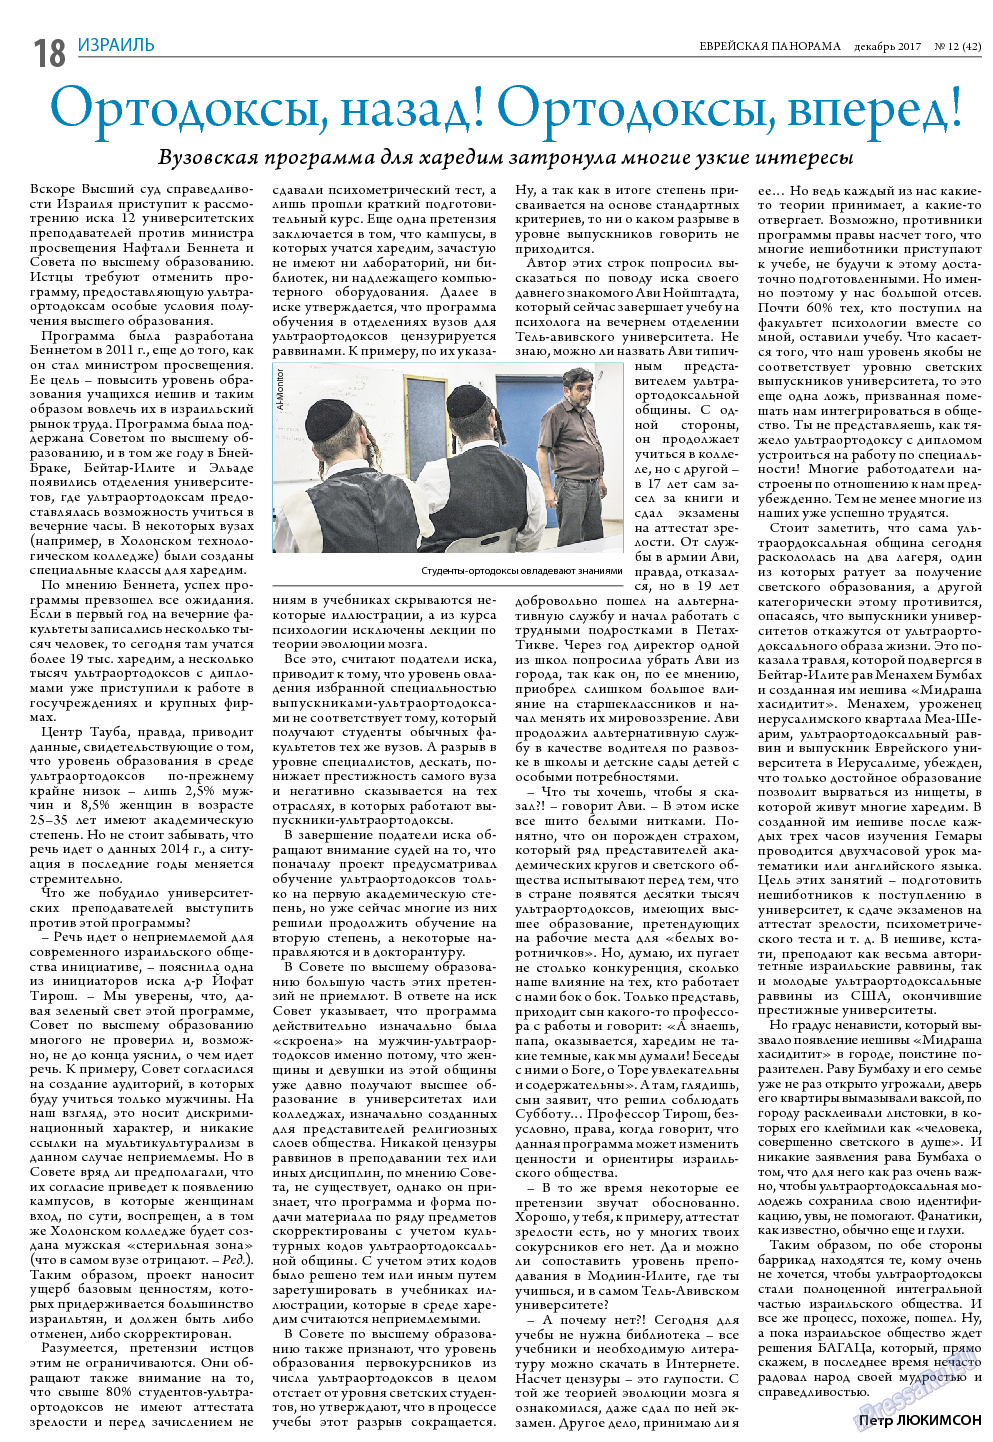 Еврейская панорама, газета. 2017 №12 стр.18